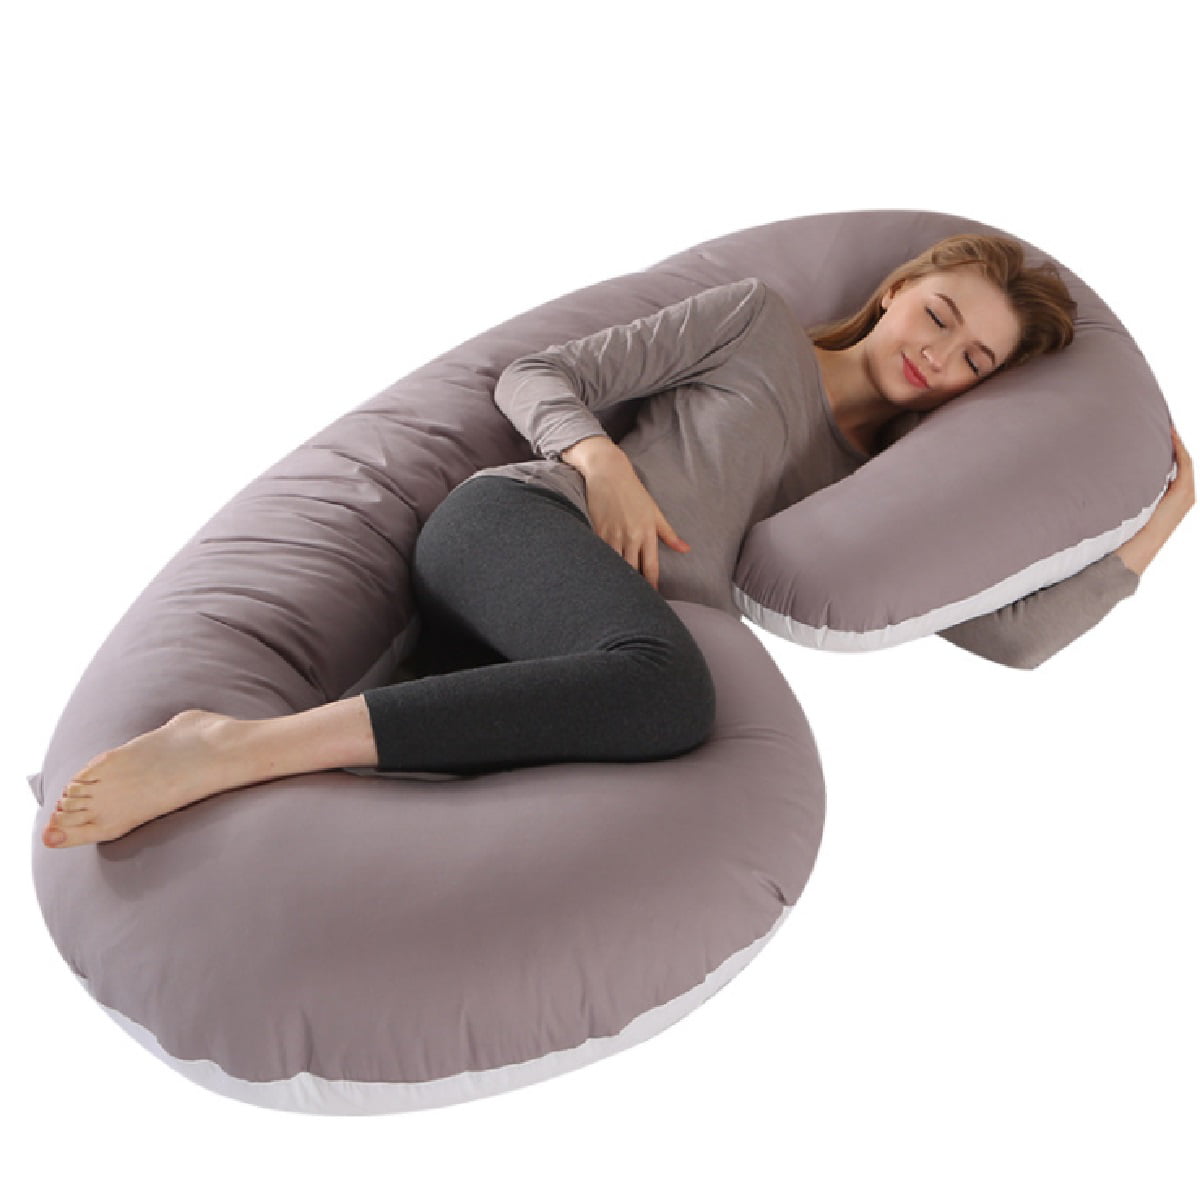 Sleeping Support Pillow For Pregnant Women U Shape Maternity Body Side Sleeper 